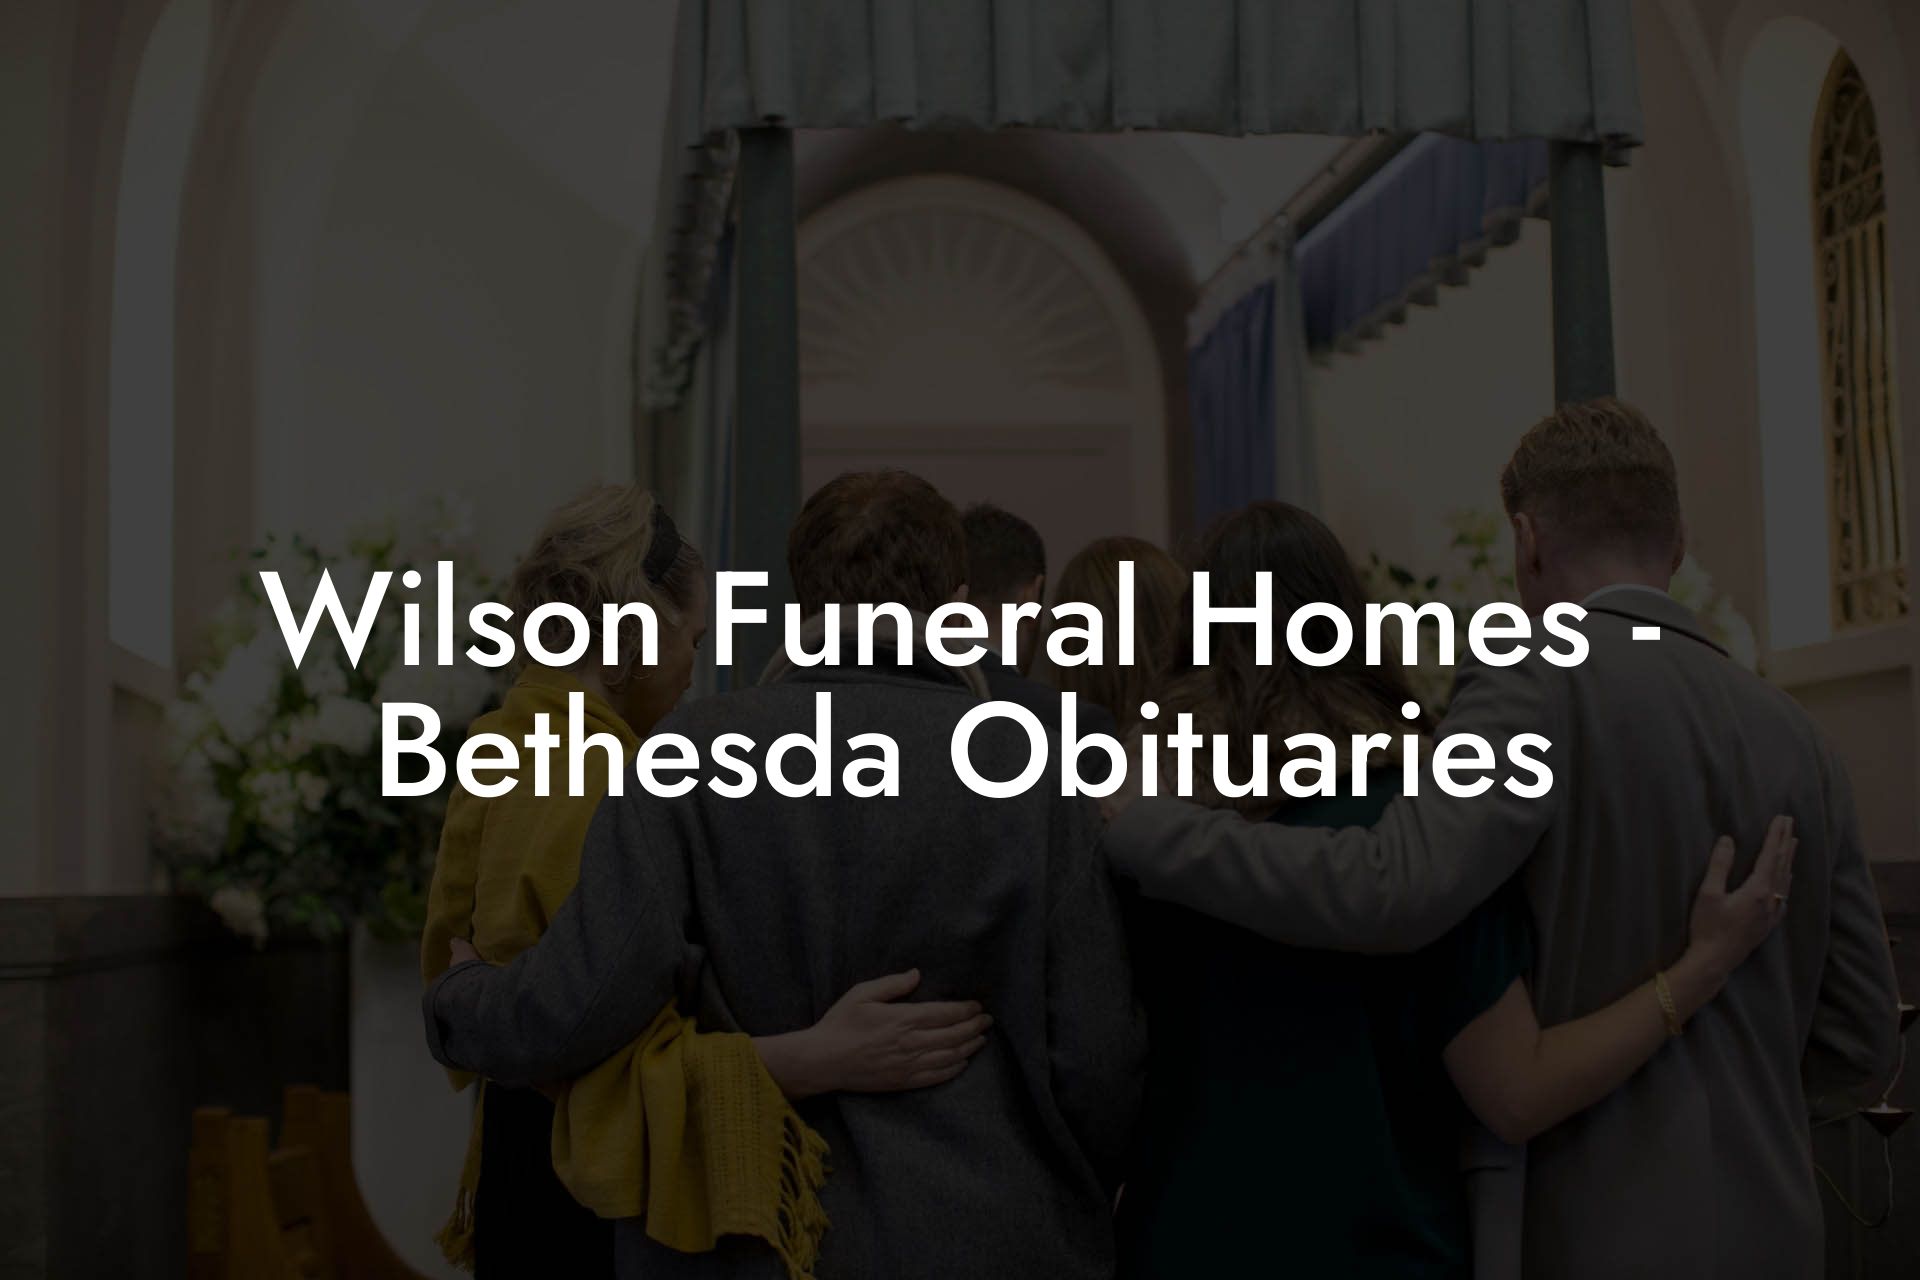 Wilson Funeral Homes - Bethesda Obituaries